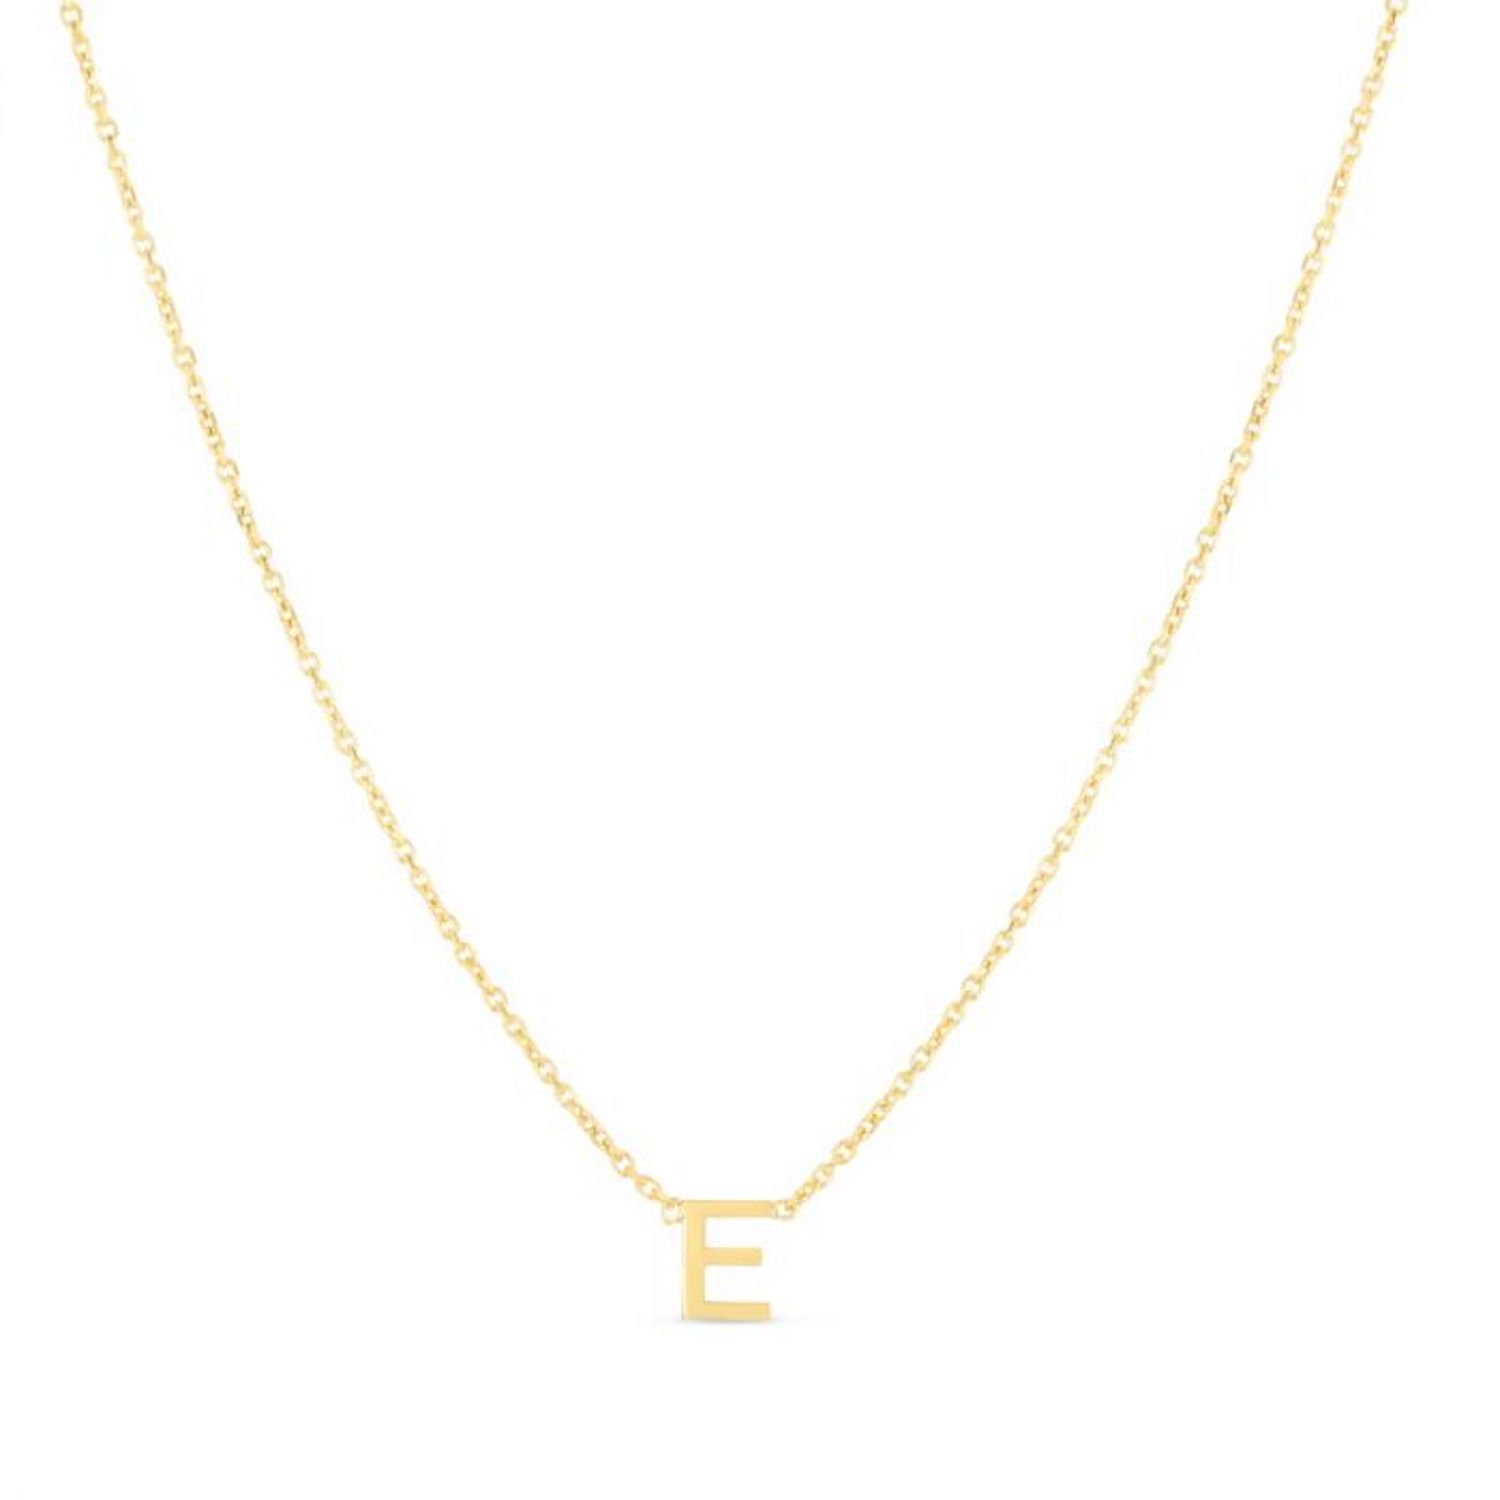 14K Yellow Gold Letter Initials Pendant Necklace 16"-18" - E